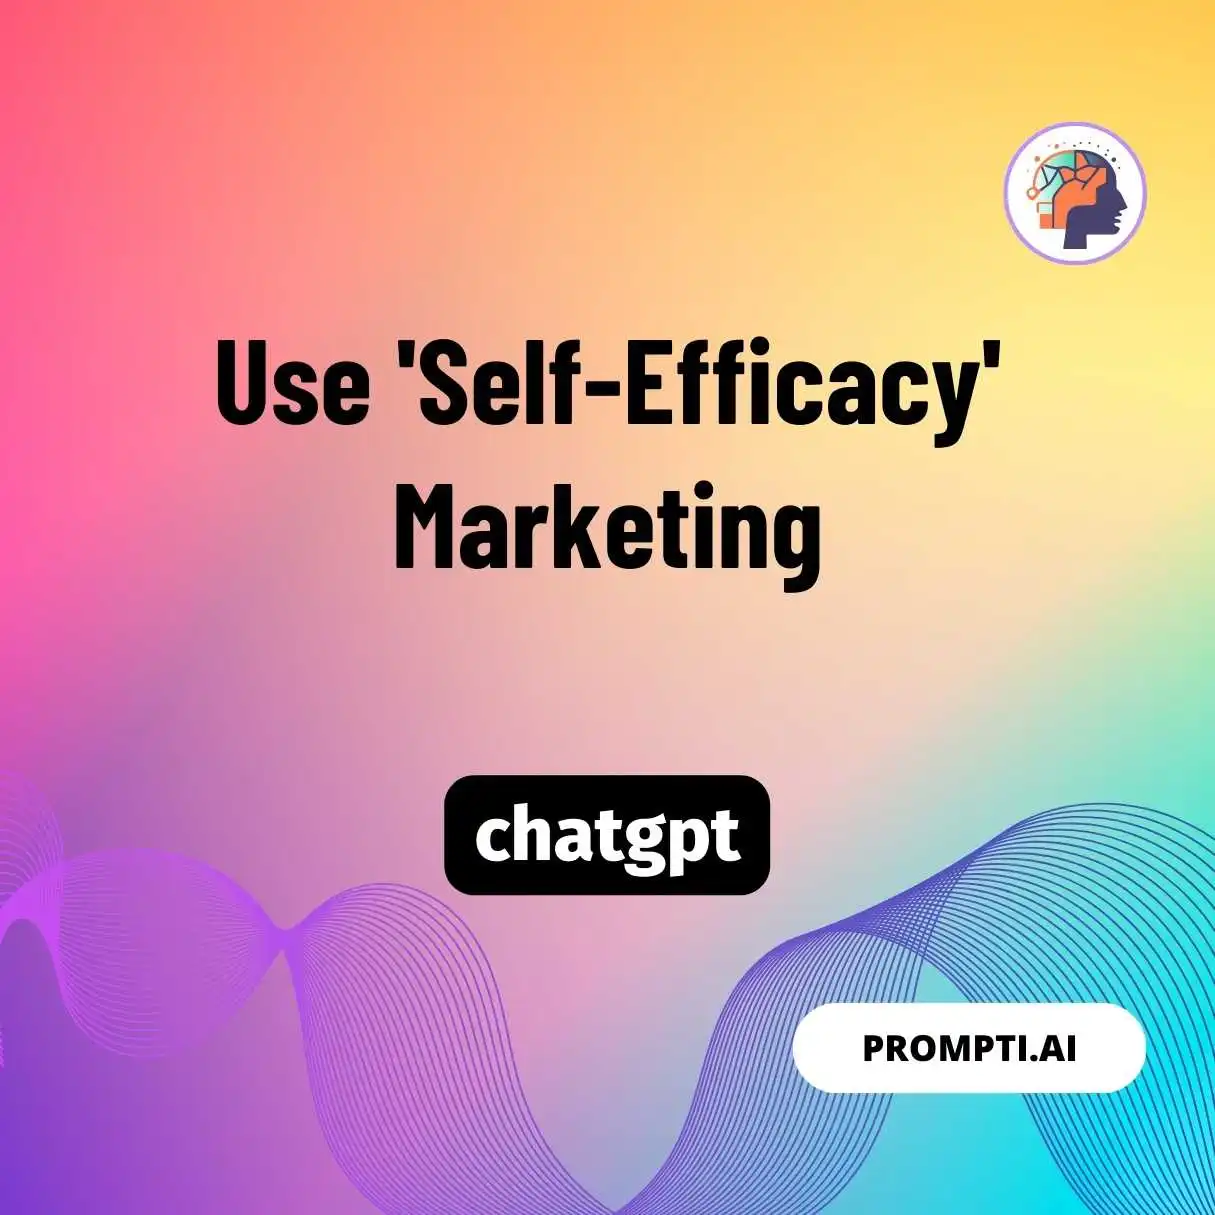 Use ‘Self-Efficacy’ Marketing